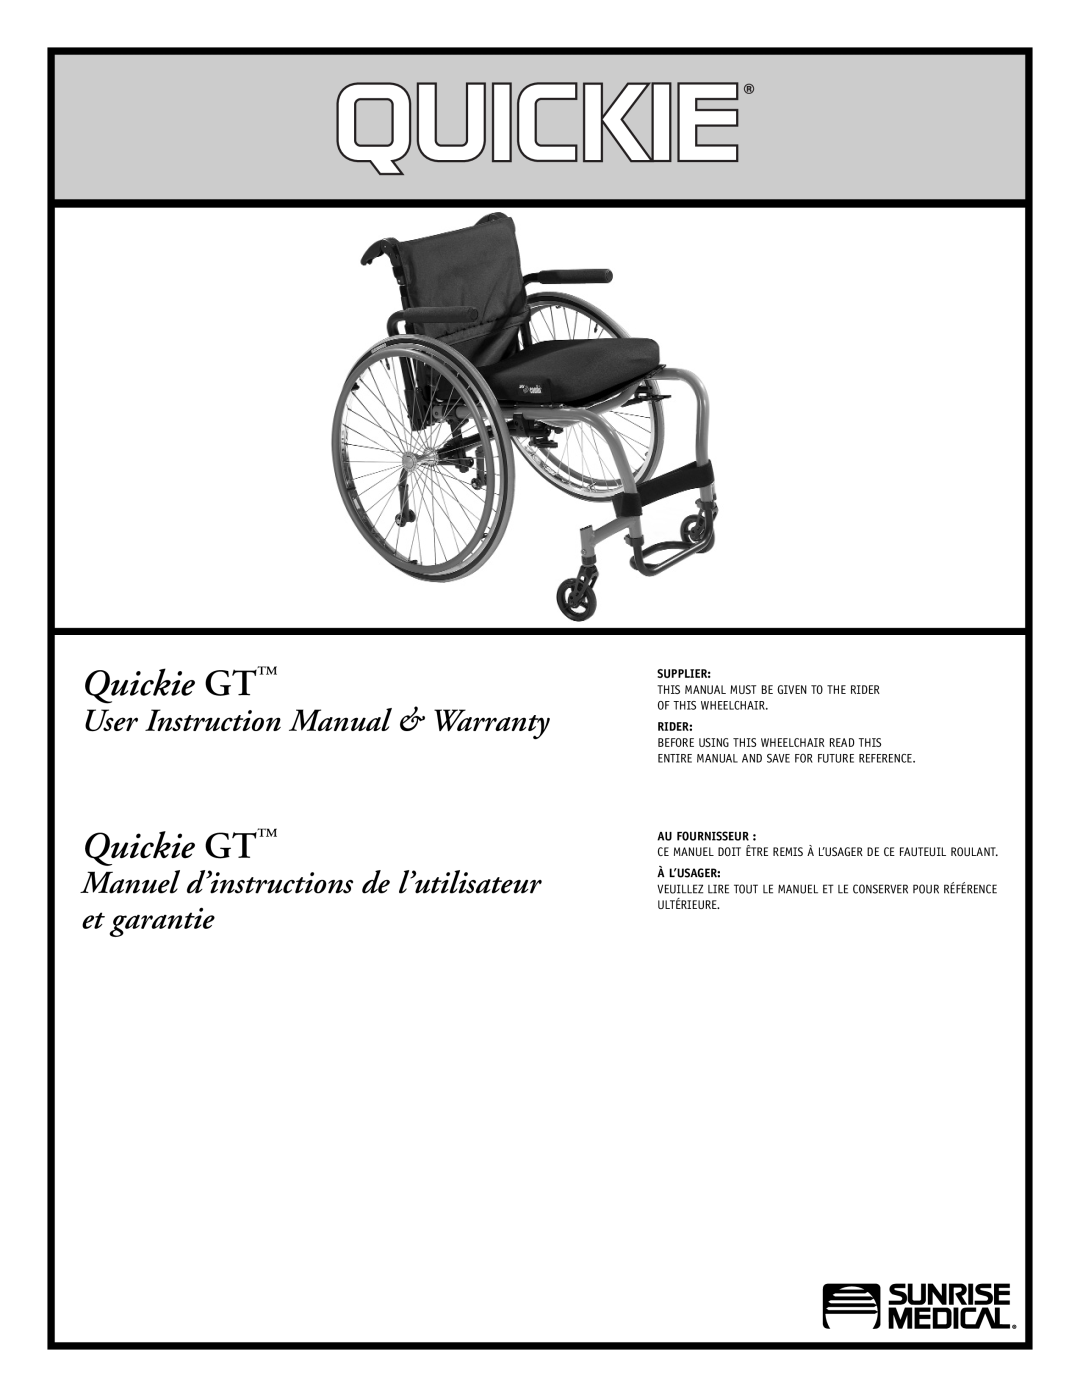 Sunrise Medical instruction manual Quickie GT, User Instruction Manual & Warranty, Supplier, Rider, Au Fournisseur 